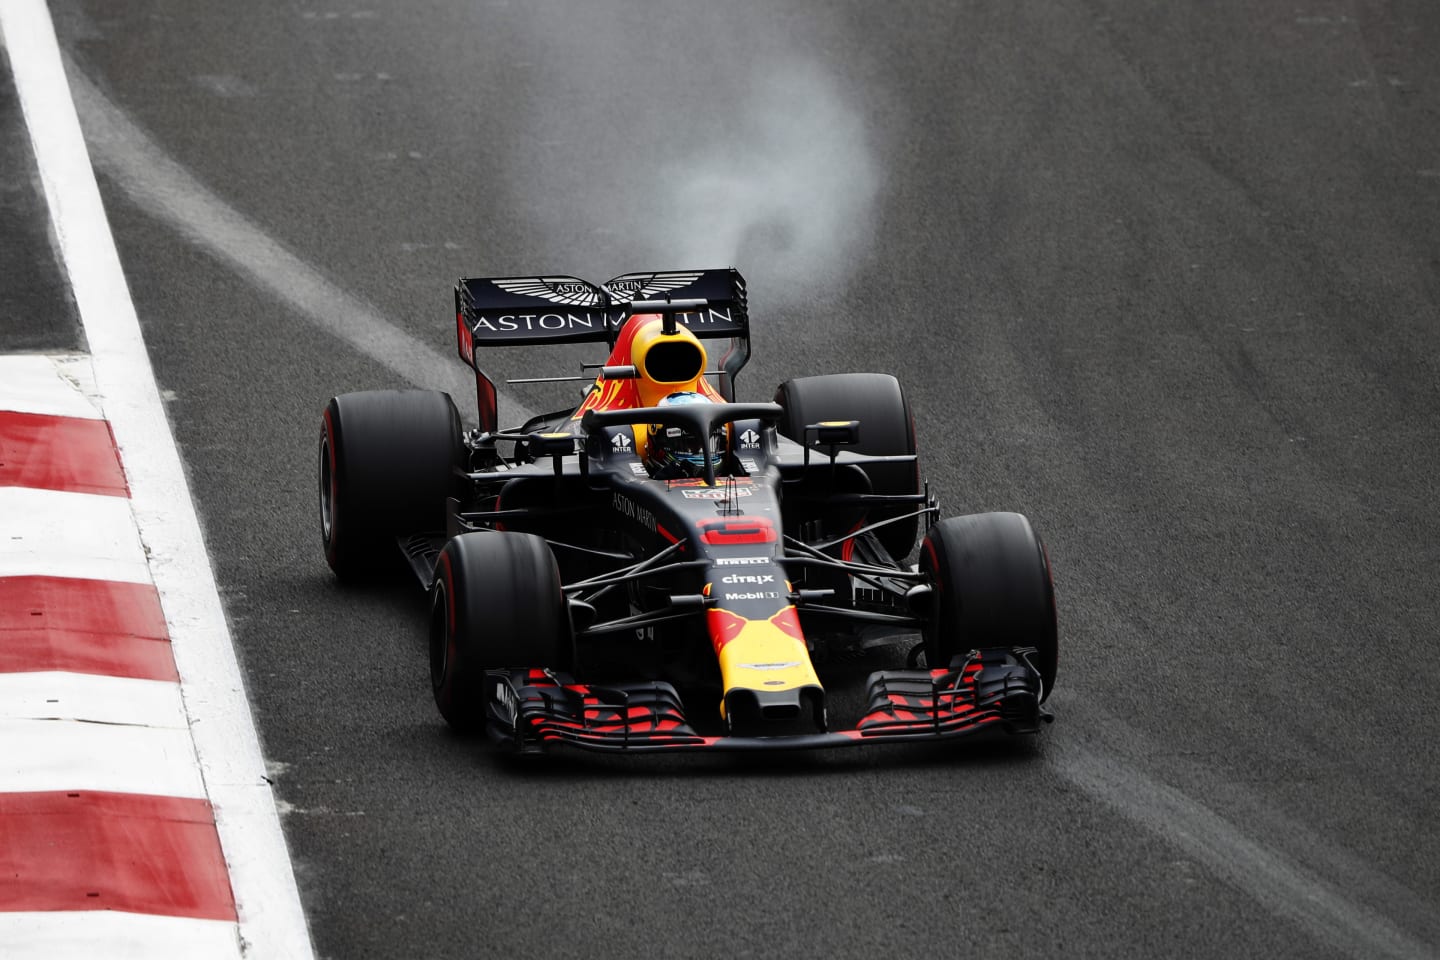 AUTODROMO HERMANOS RODRIGUEZ, MEXICO - OCTOBER 28: Daniel Ricciardo, Red Bull Racing RB14, suffers